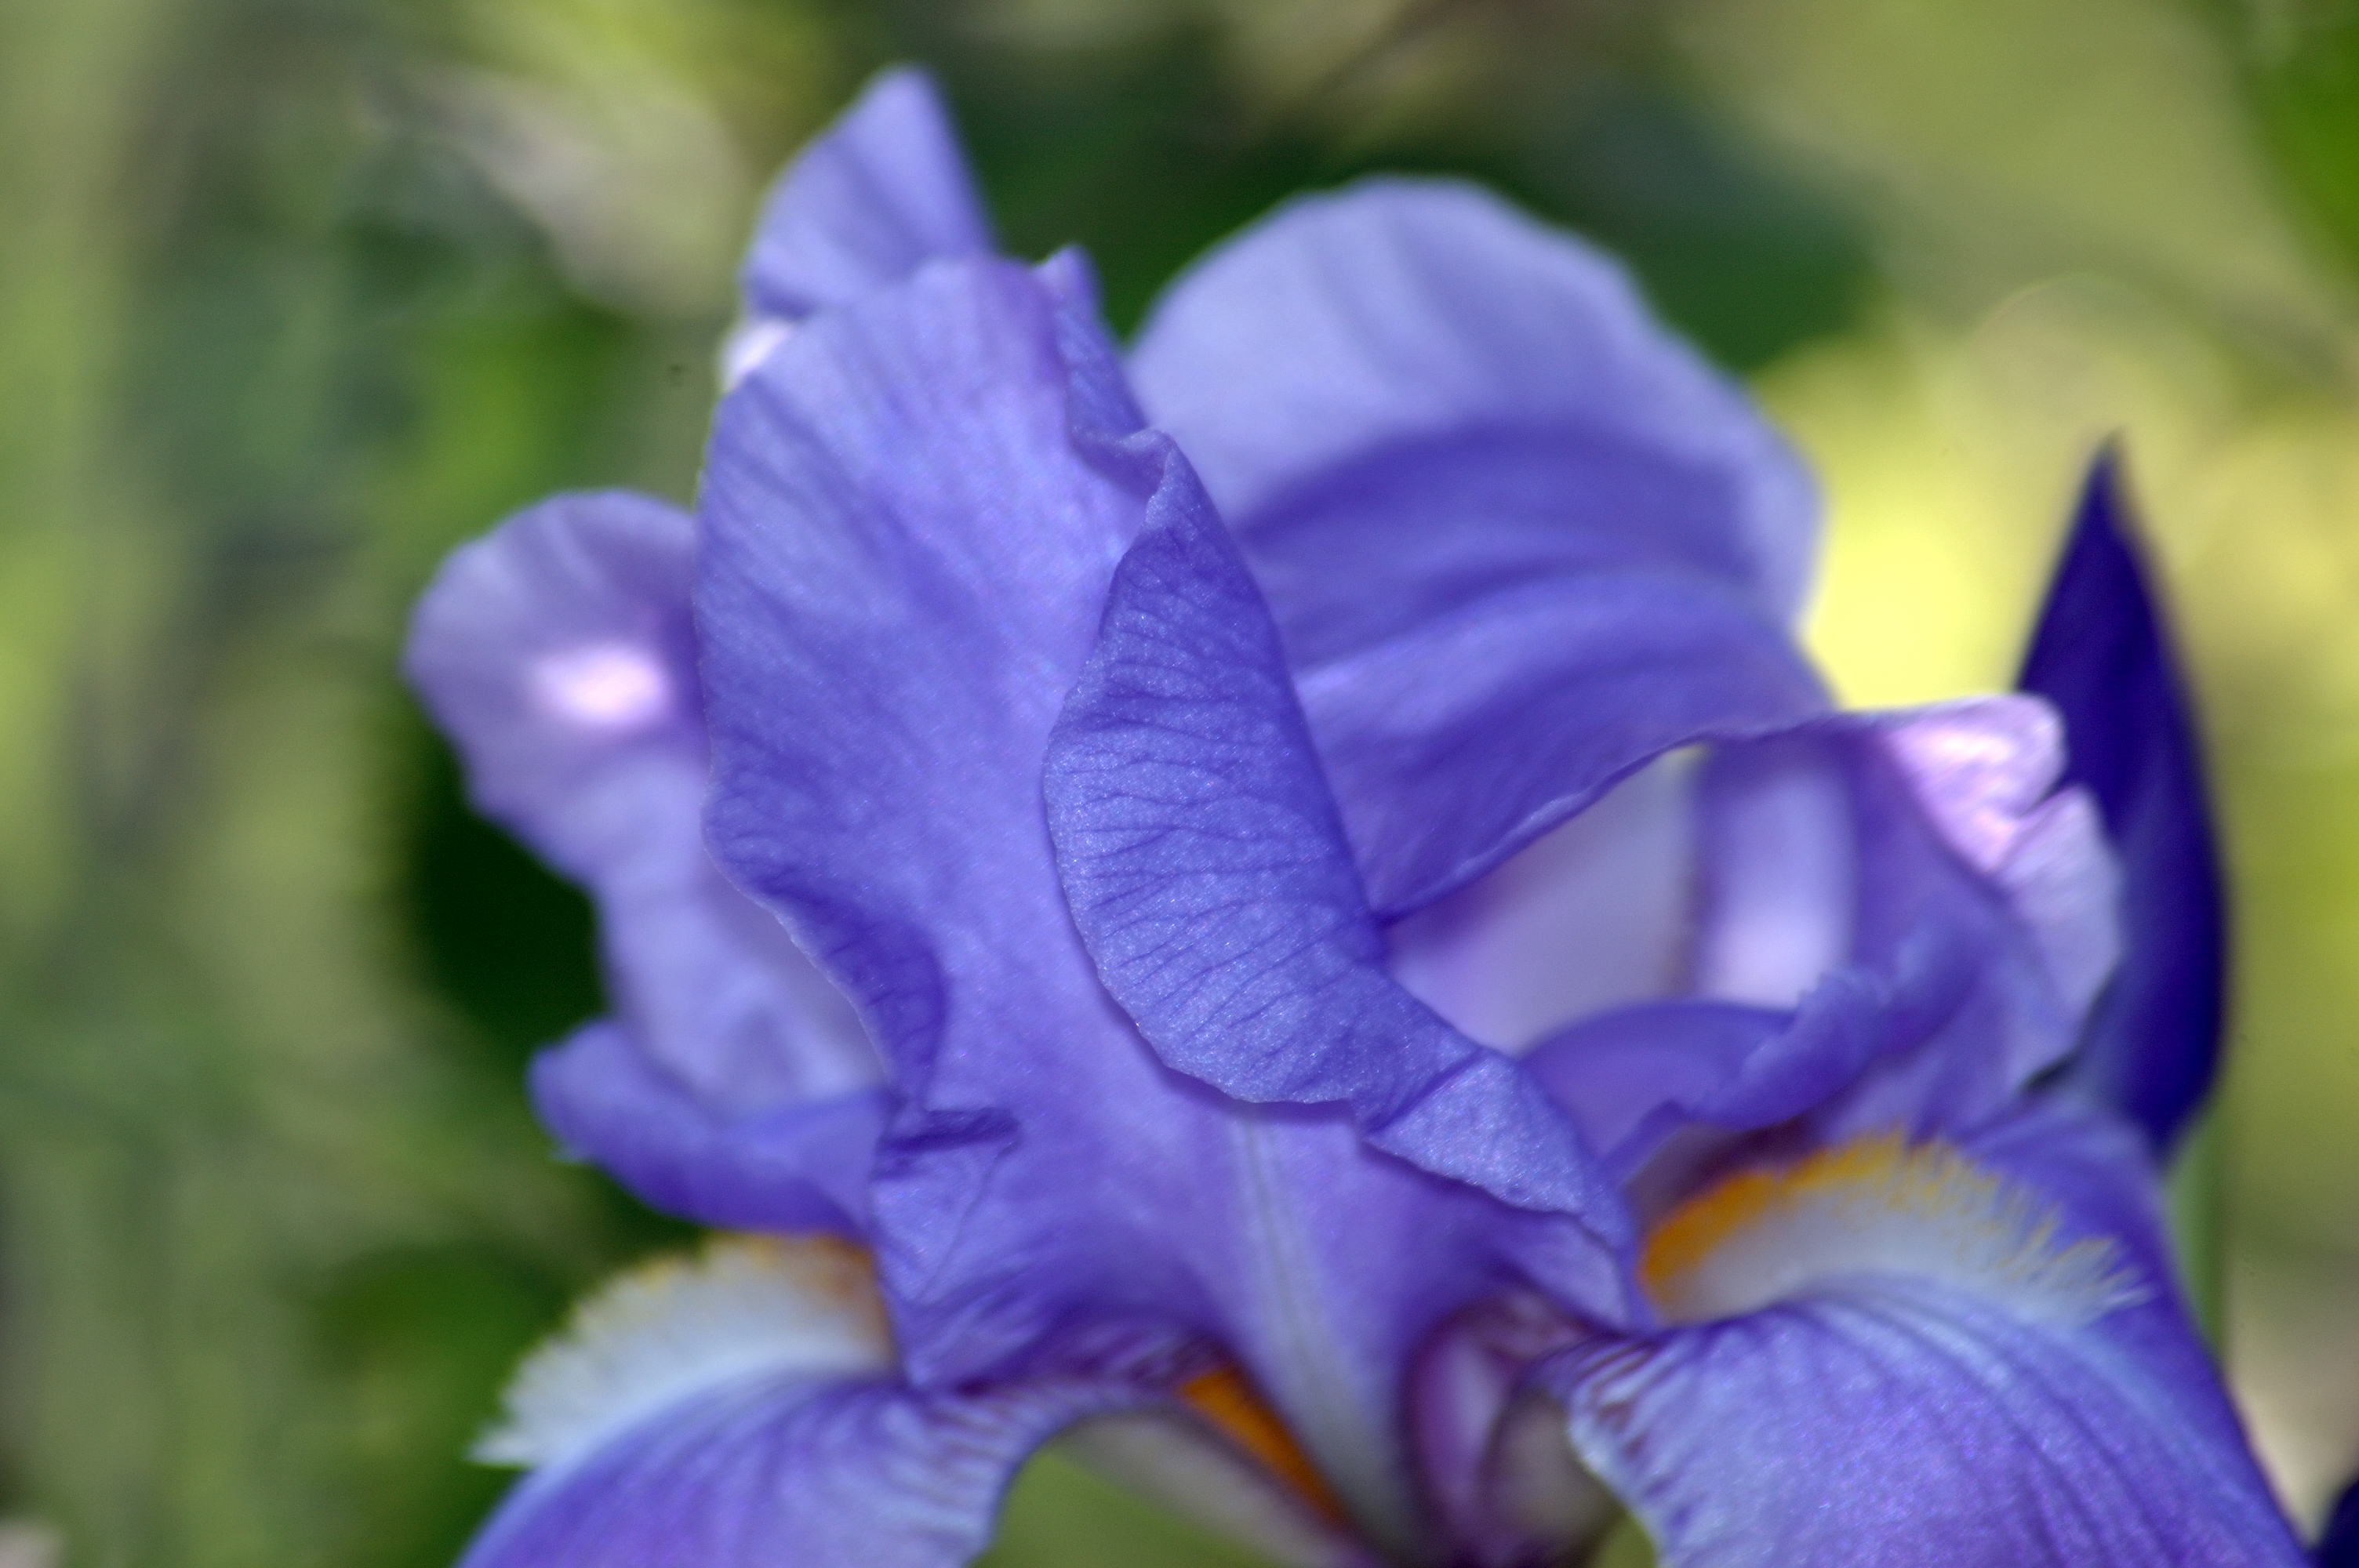 blue iris zmodo